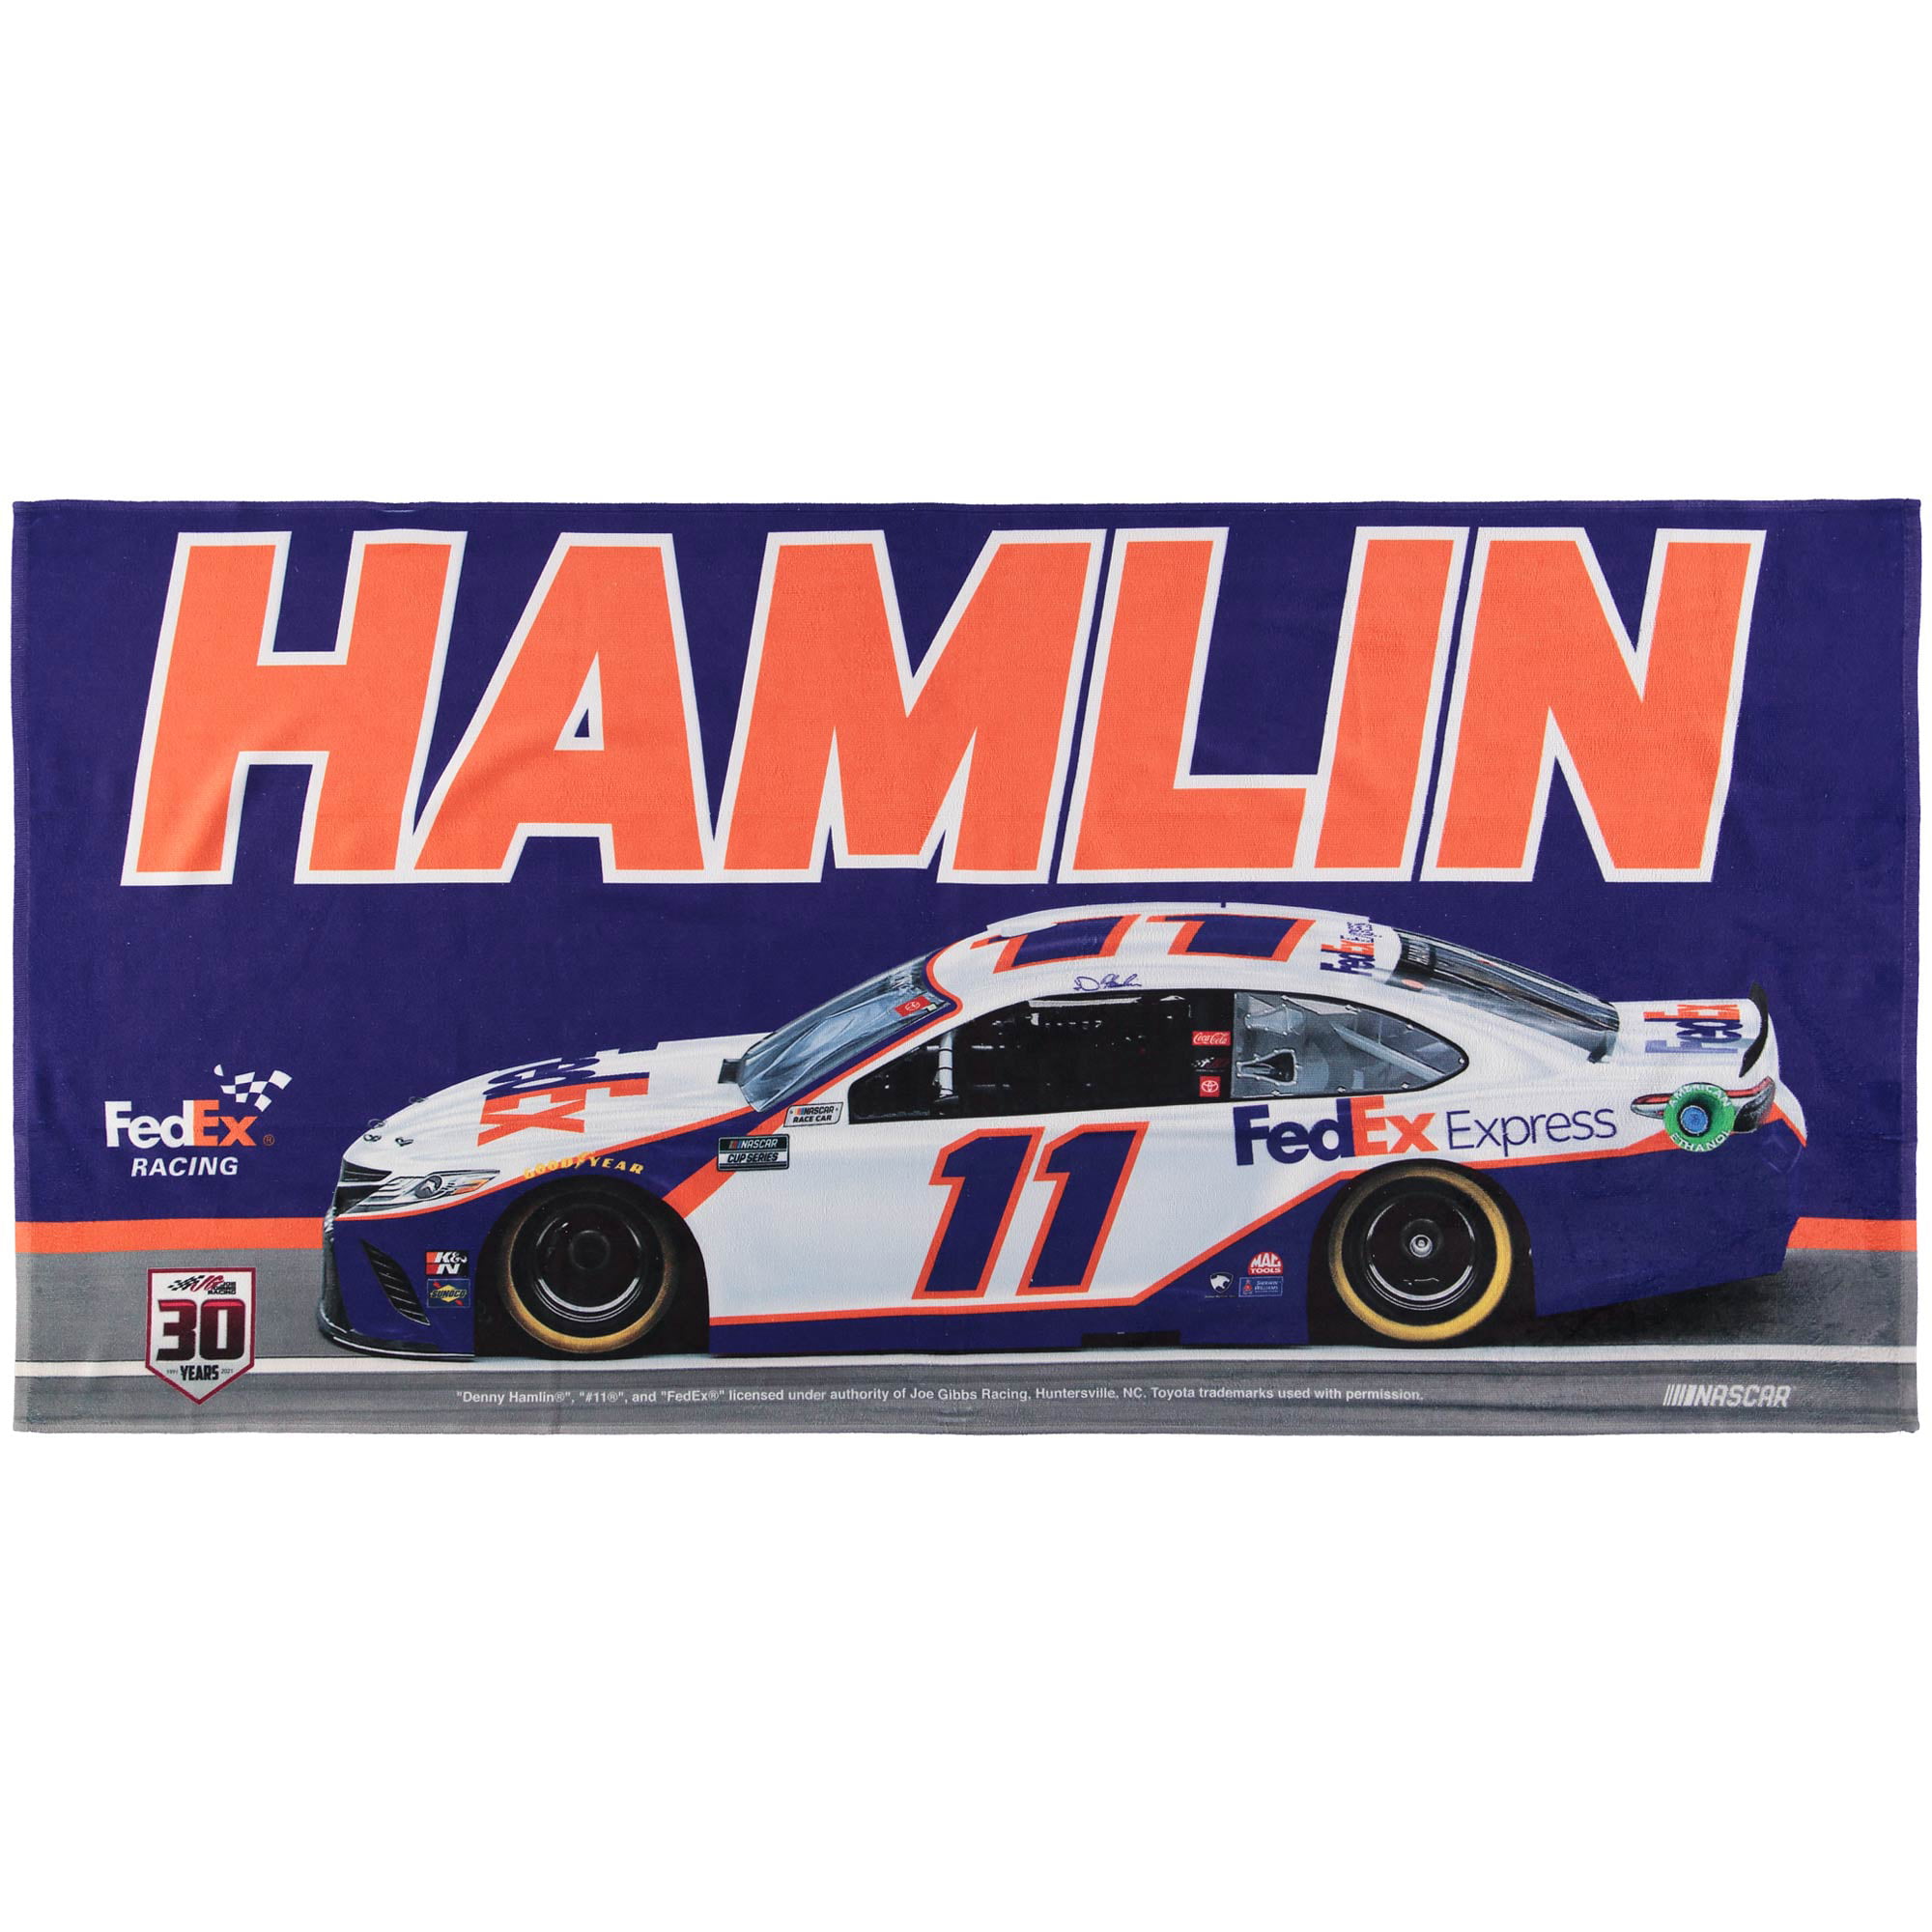 Every Day Is Race Day NASCAR Driver Denny Hamlin 11 FedEx License Plate Frame 